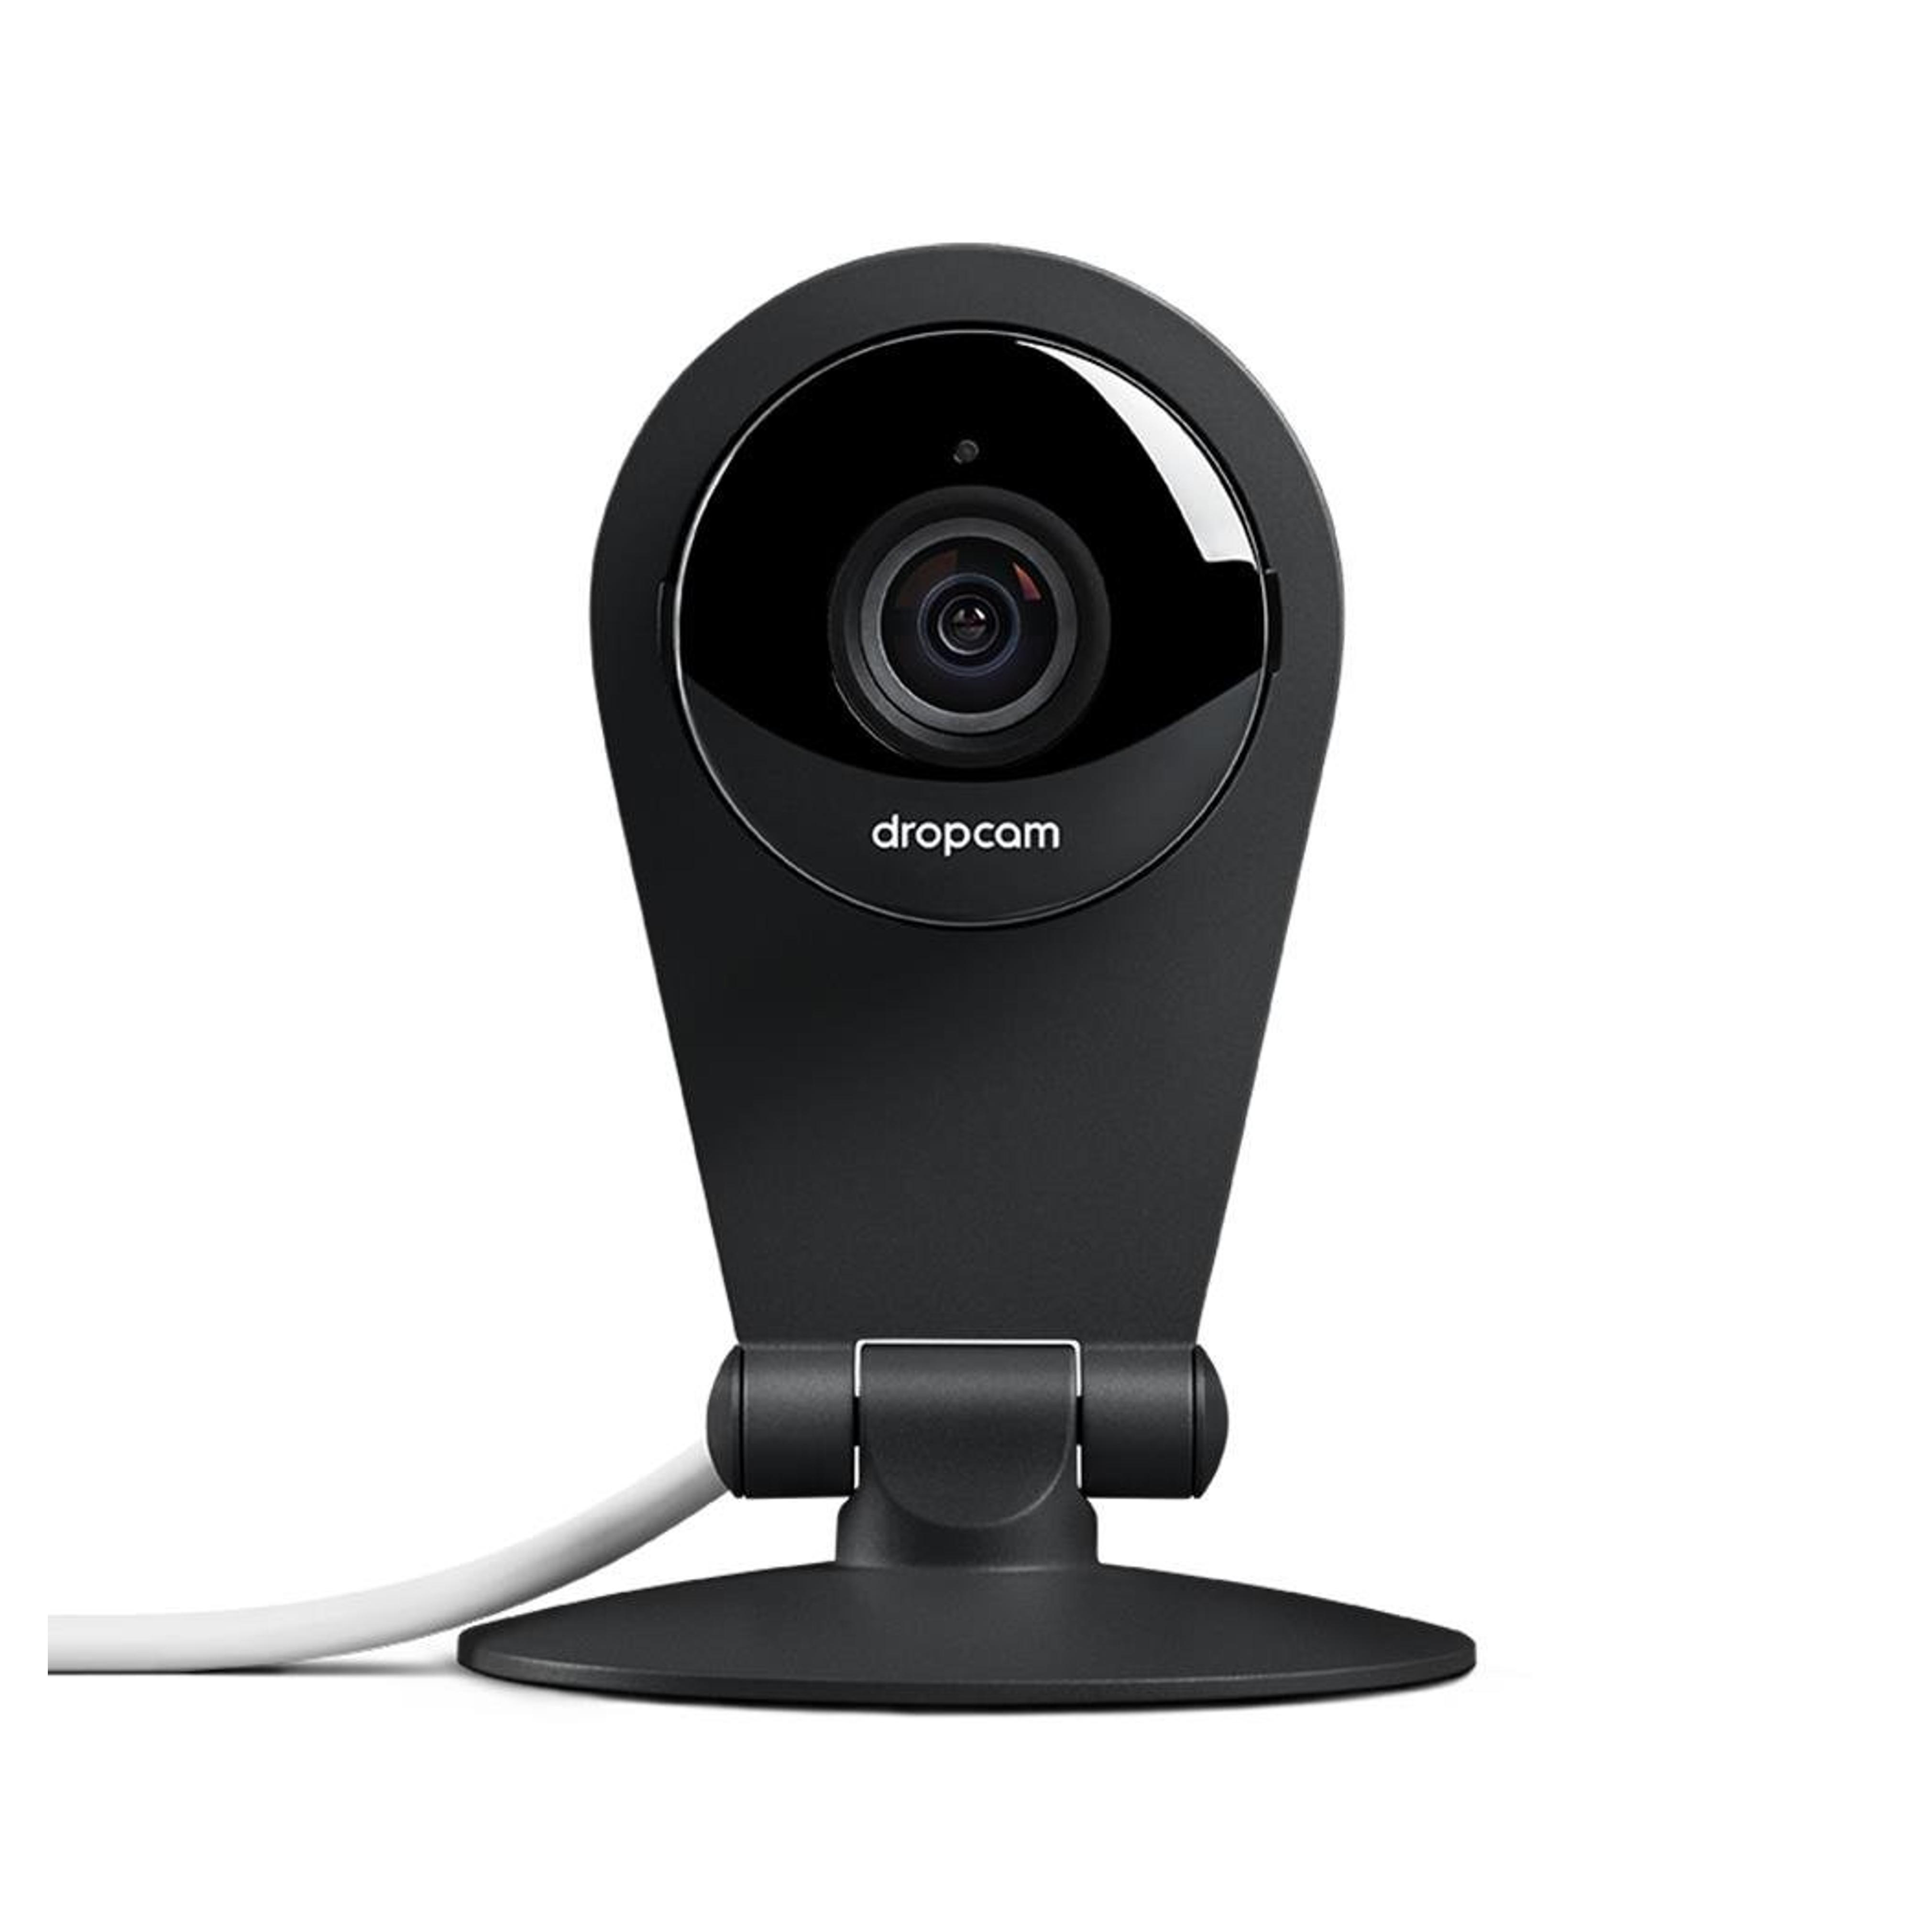 Dropcam Pro Wi-Fi Wireless Video Monitoring Camera